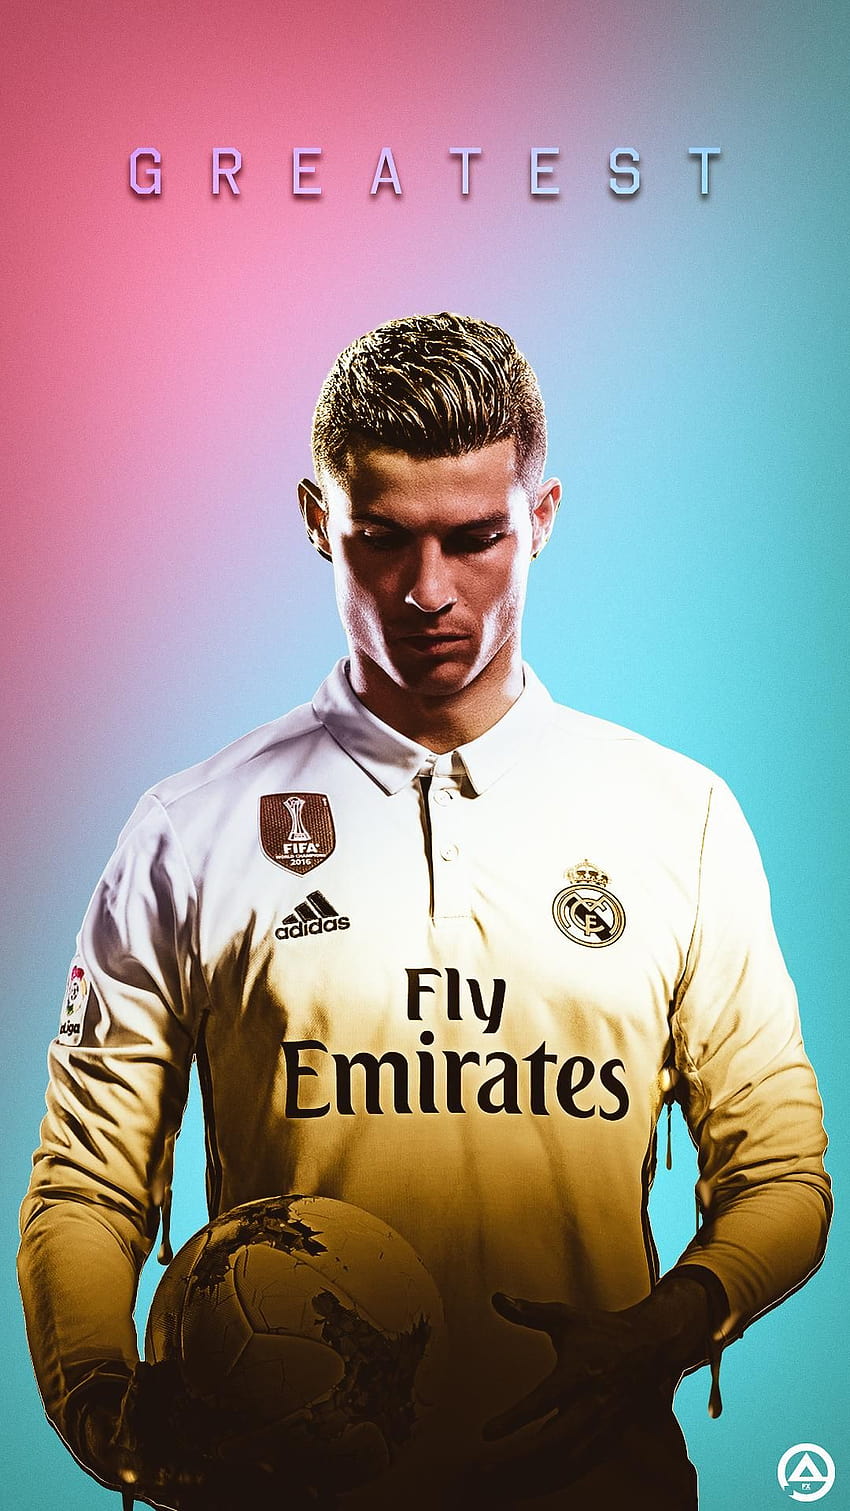 Cristiano Ronaldo G R E A T E S T [Lockscreen] 1920 x 1080 ; y…, ronaldo 포스터를 듣고 싶습니다 HD 전화 배경 화면